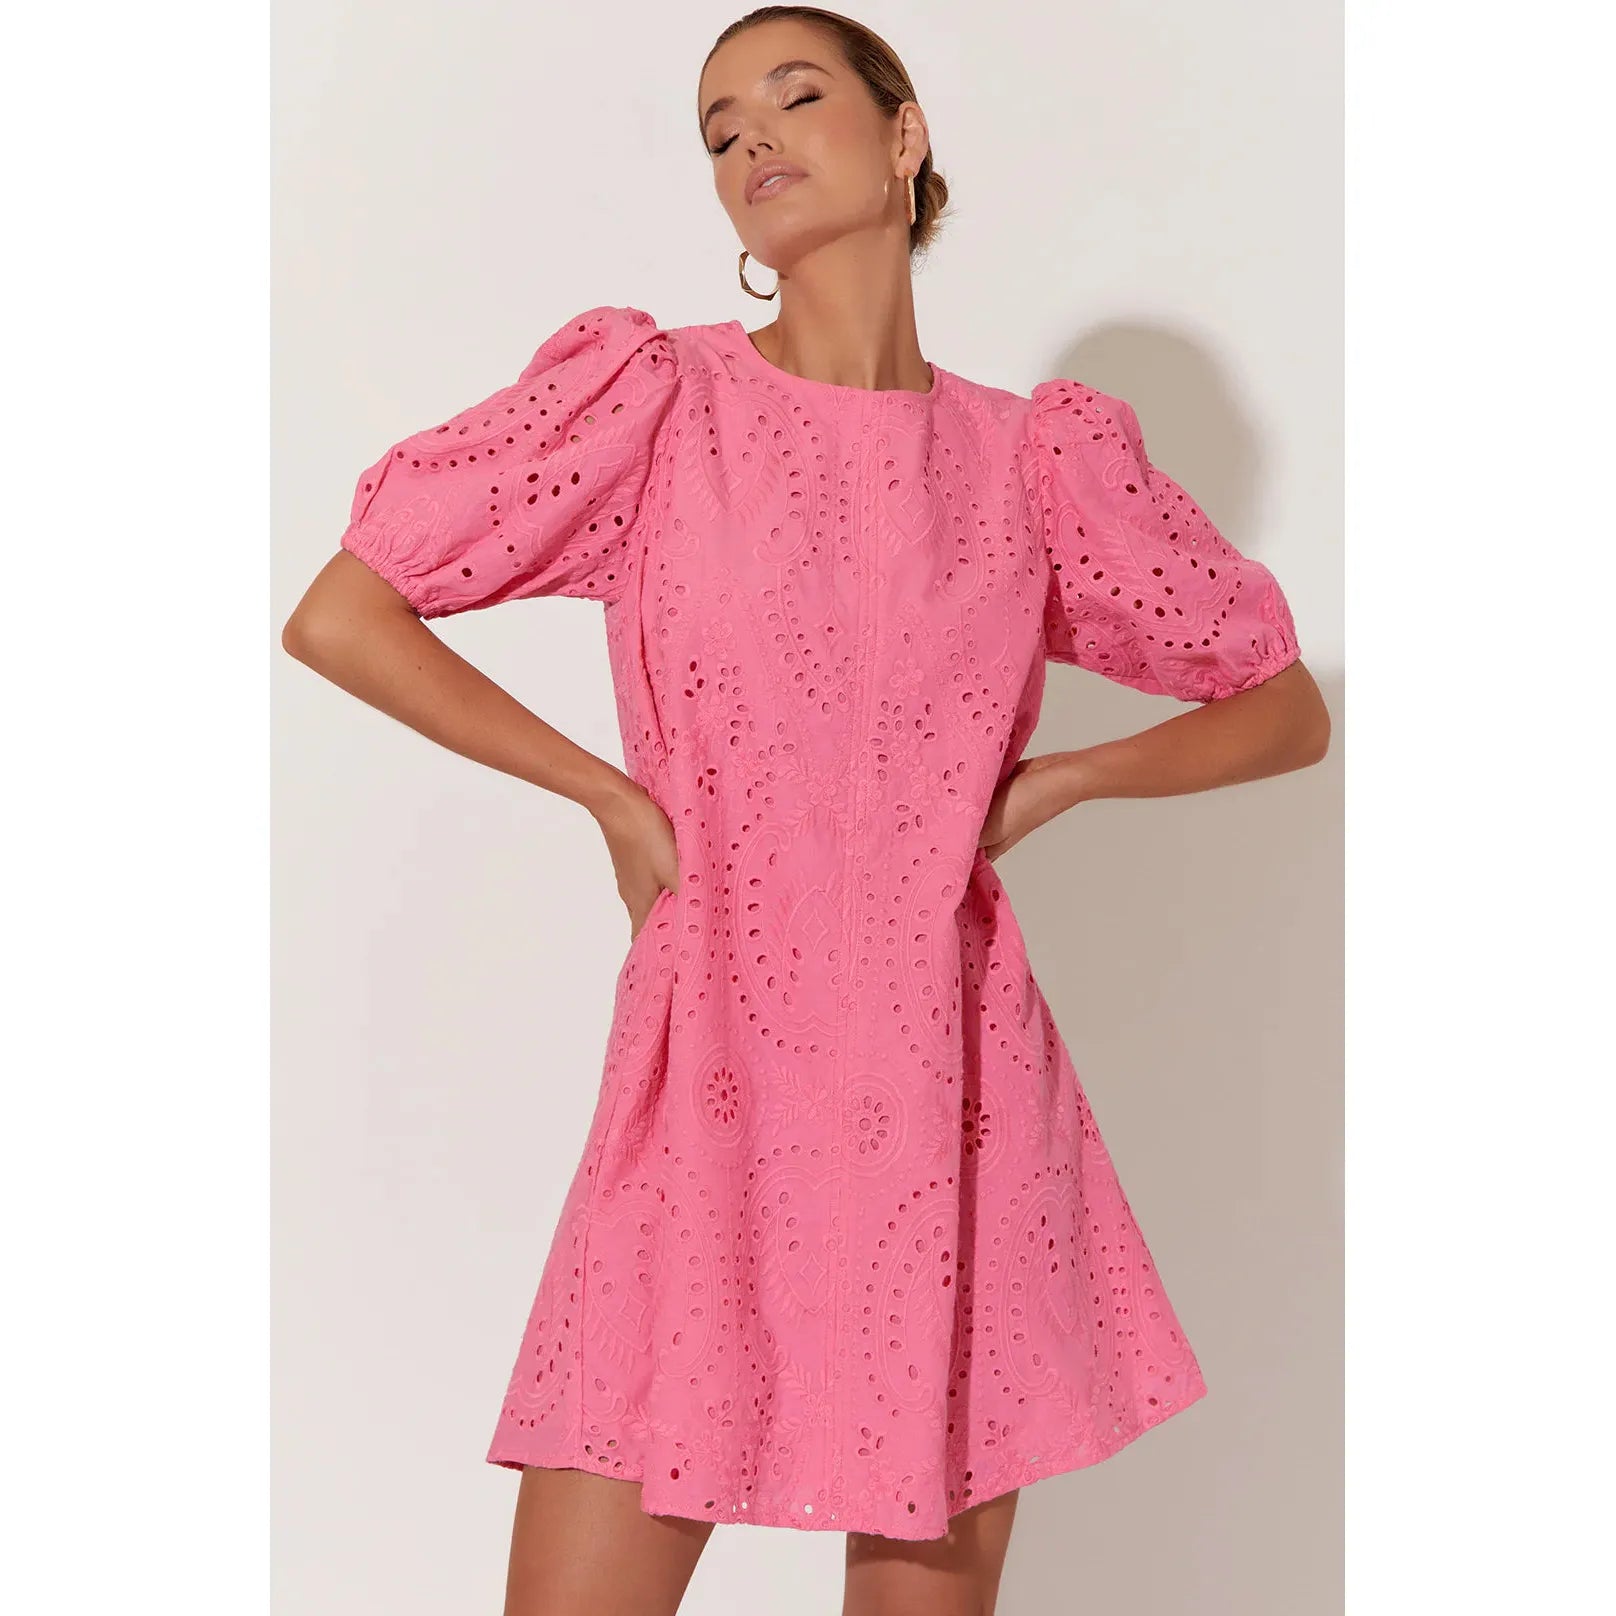 Natasha Dec Broderie Dress - Pink